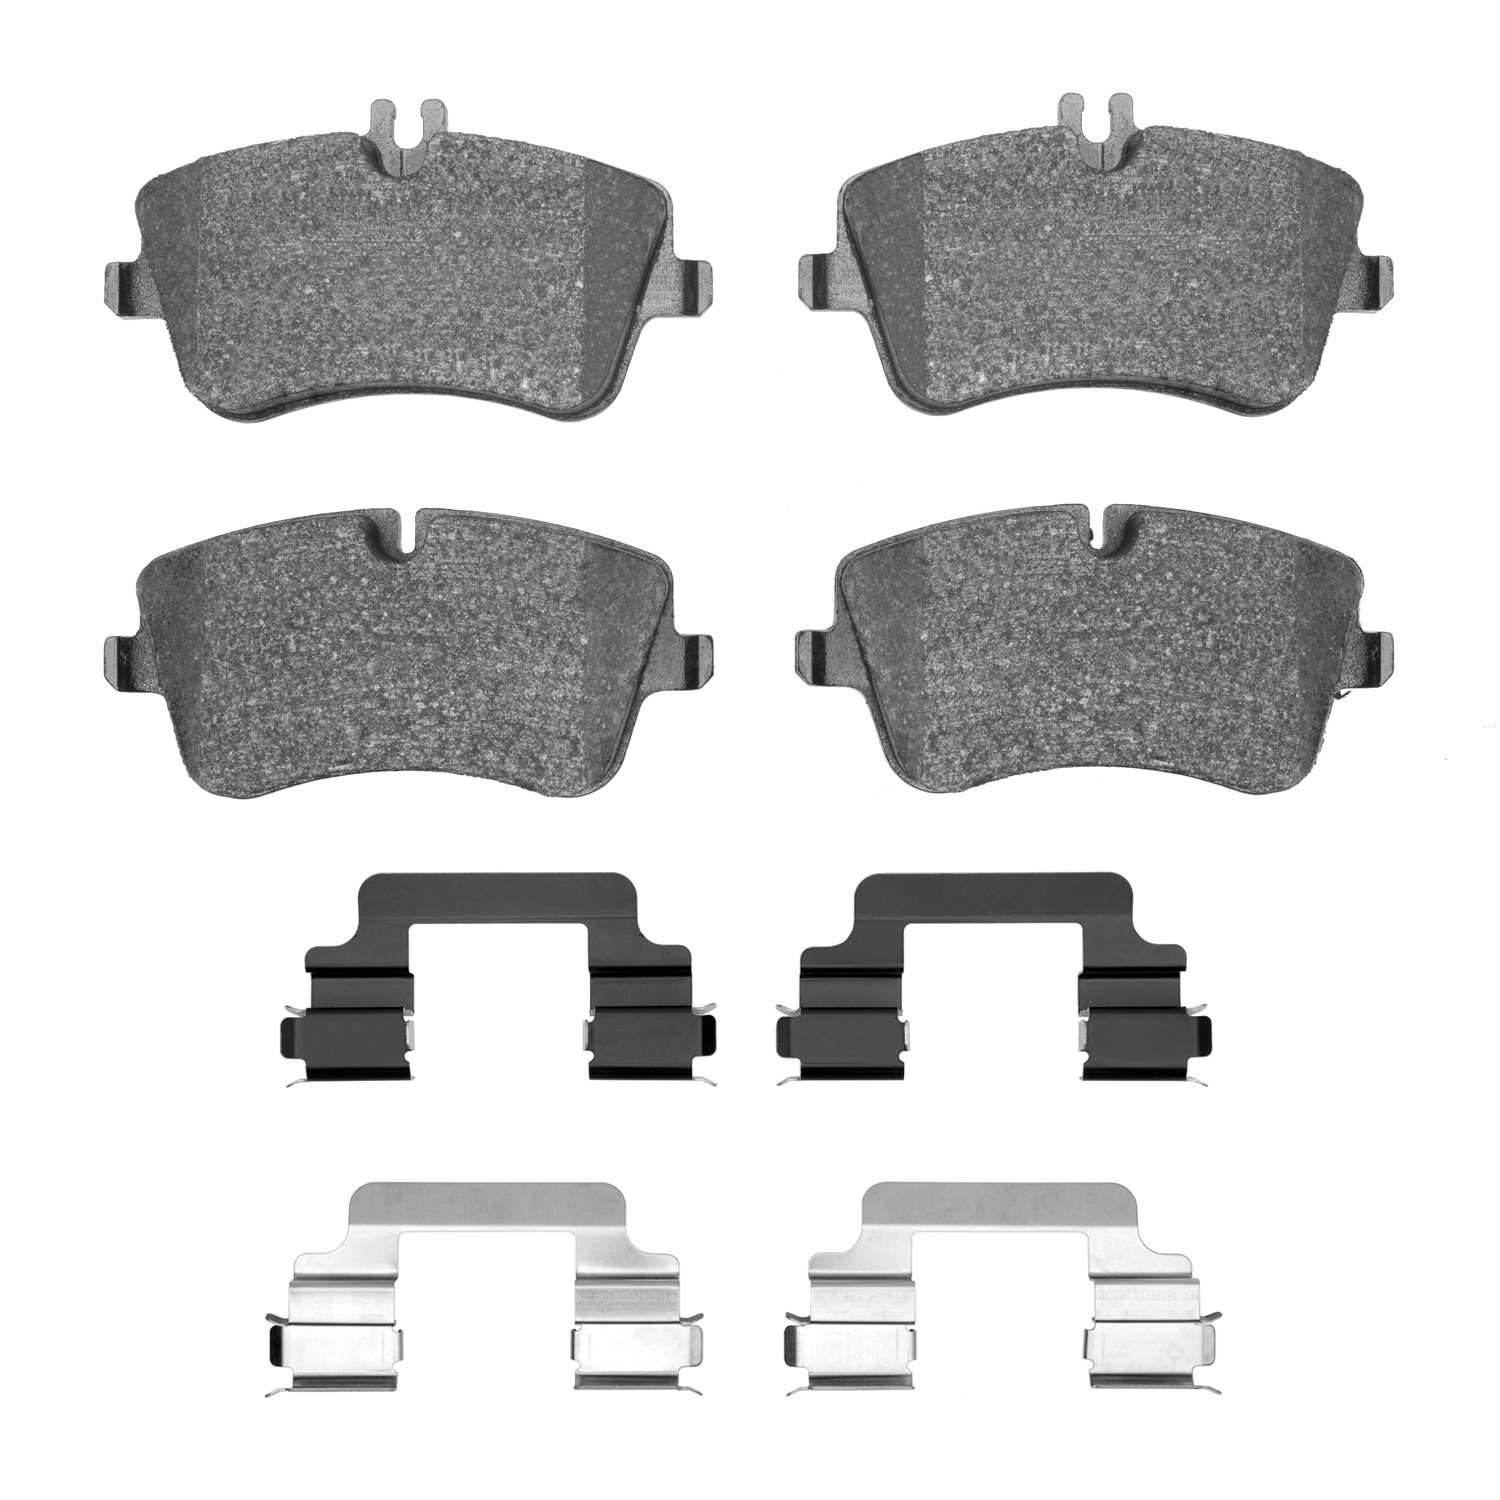 1310-0872-02 3000-Series Ceramic Brake Pads & Hardware Kit, 2001-2015 Mercedes-Benz, Position: Front